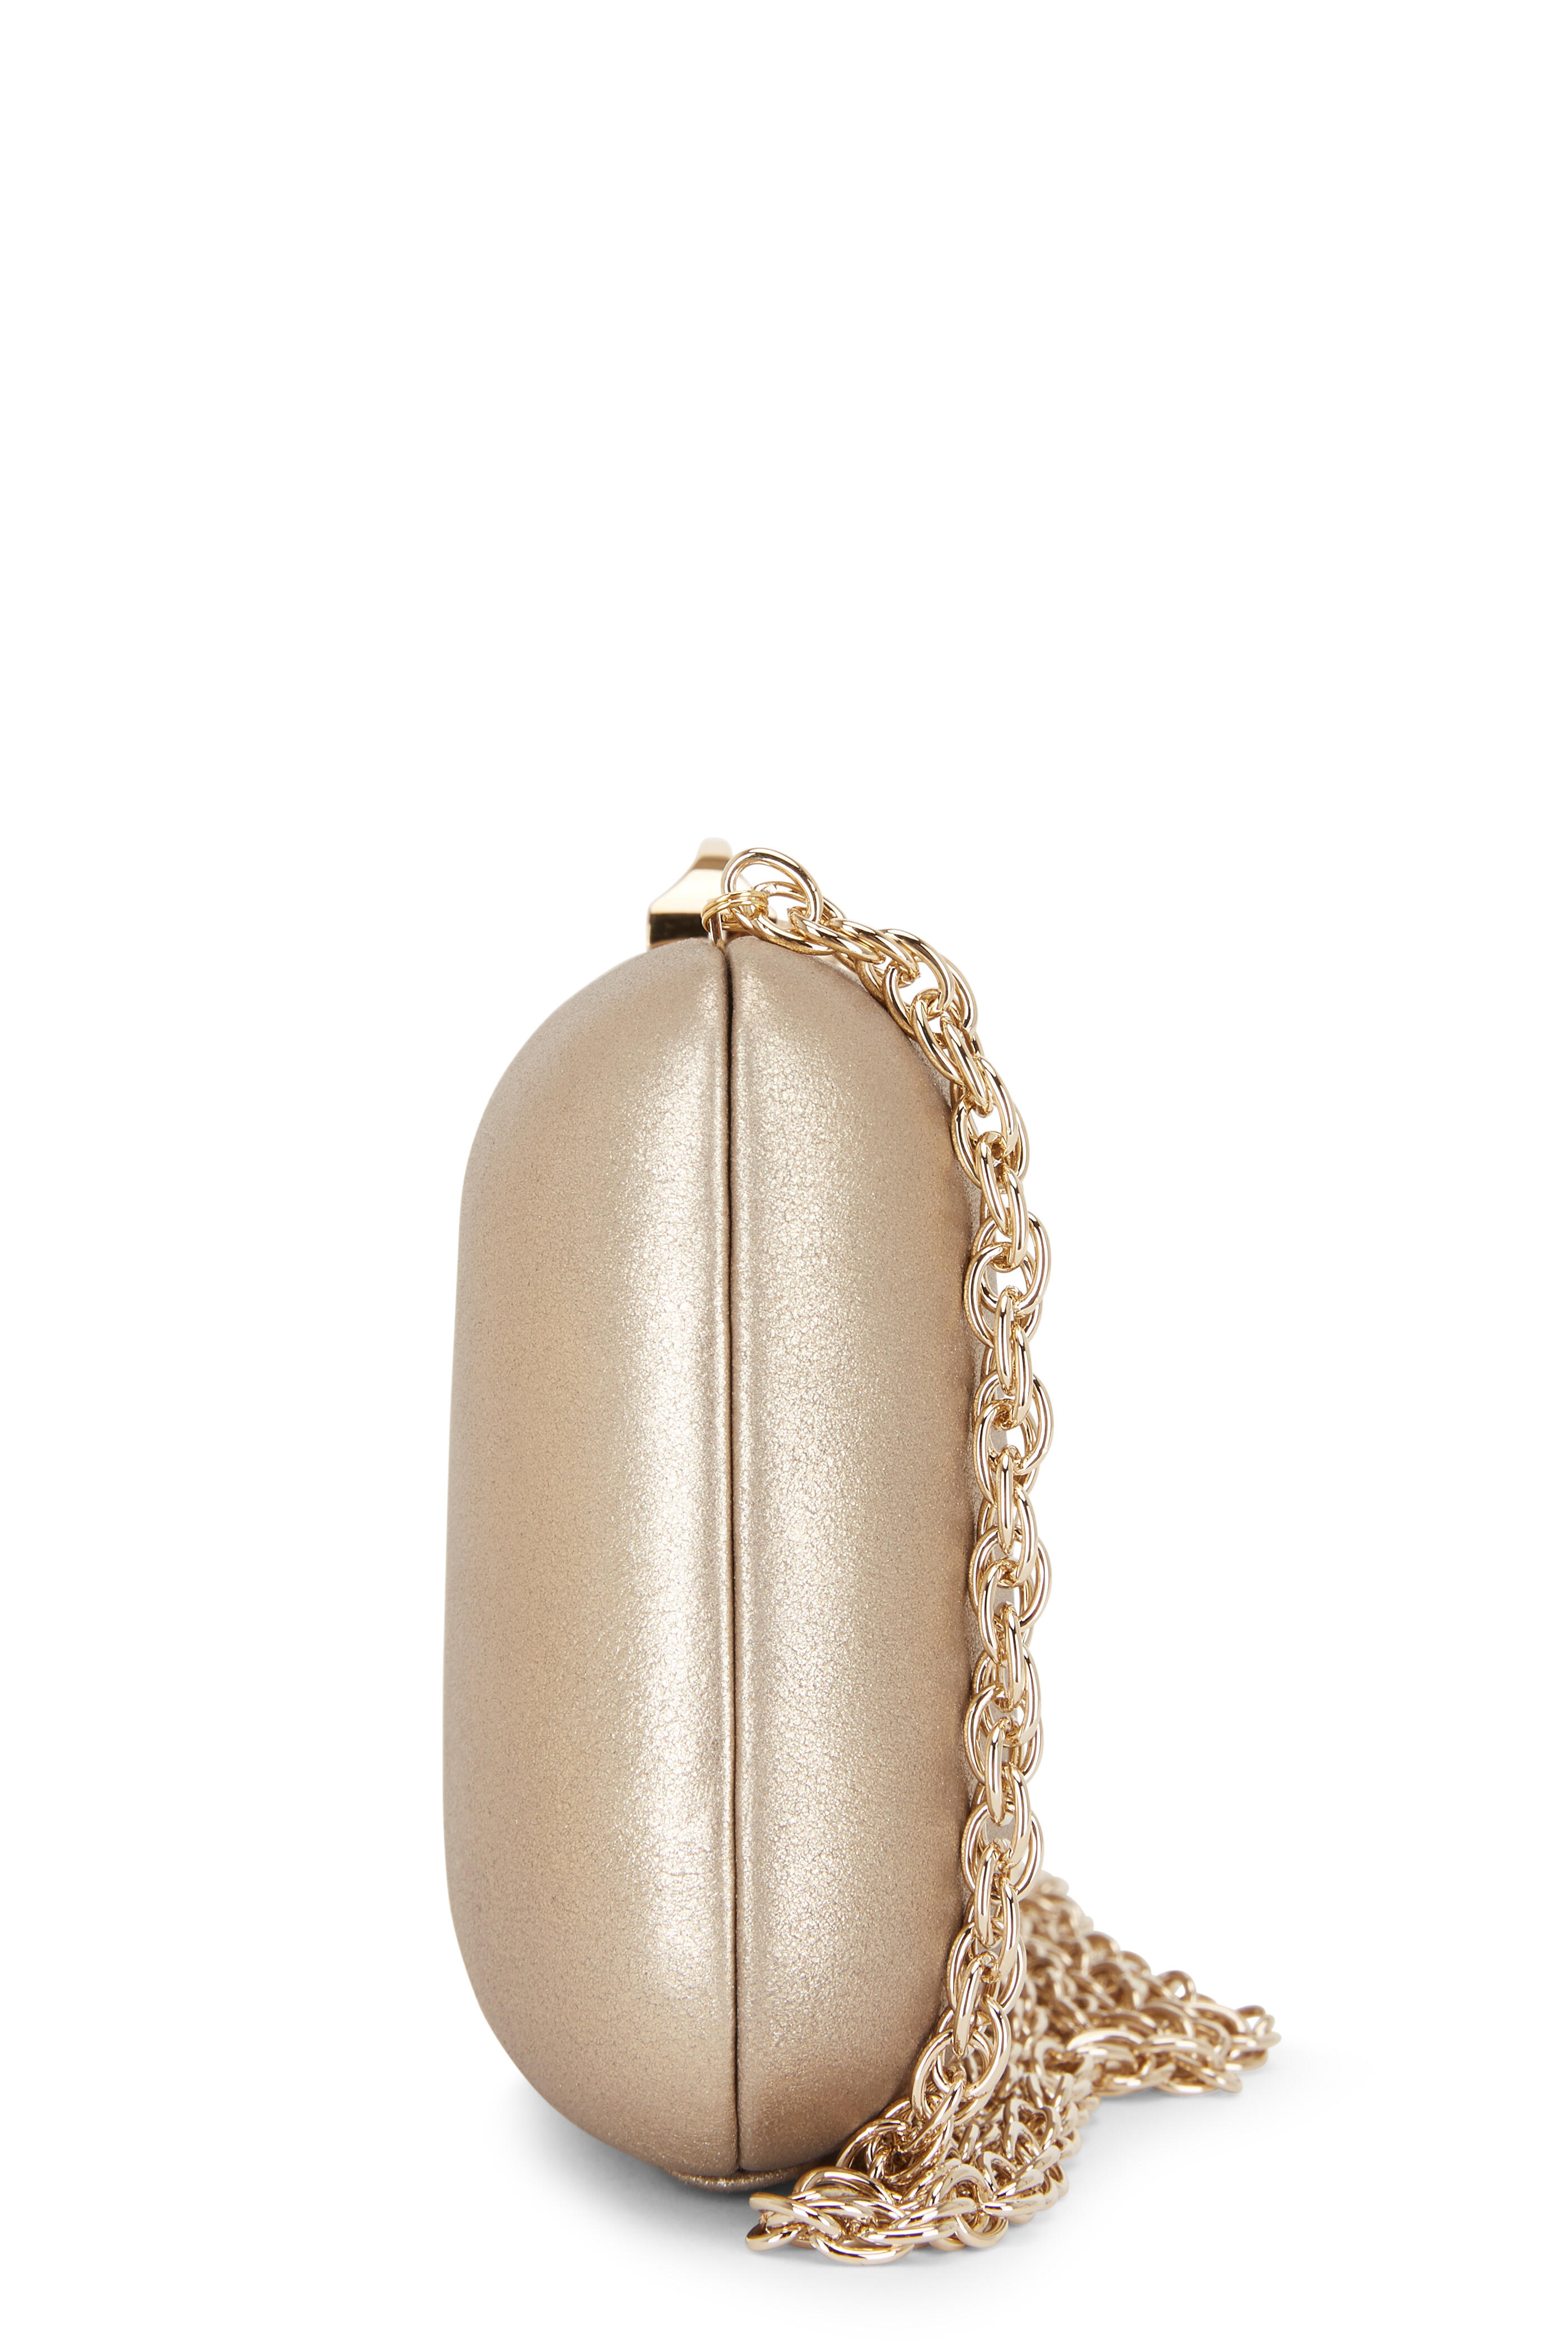 Judith Leiber Rose Golden Clutch Bag - Gold - One Size